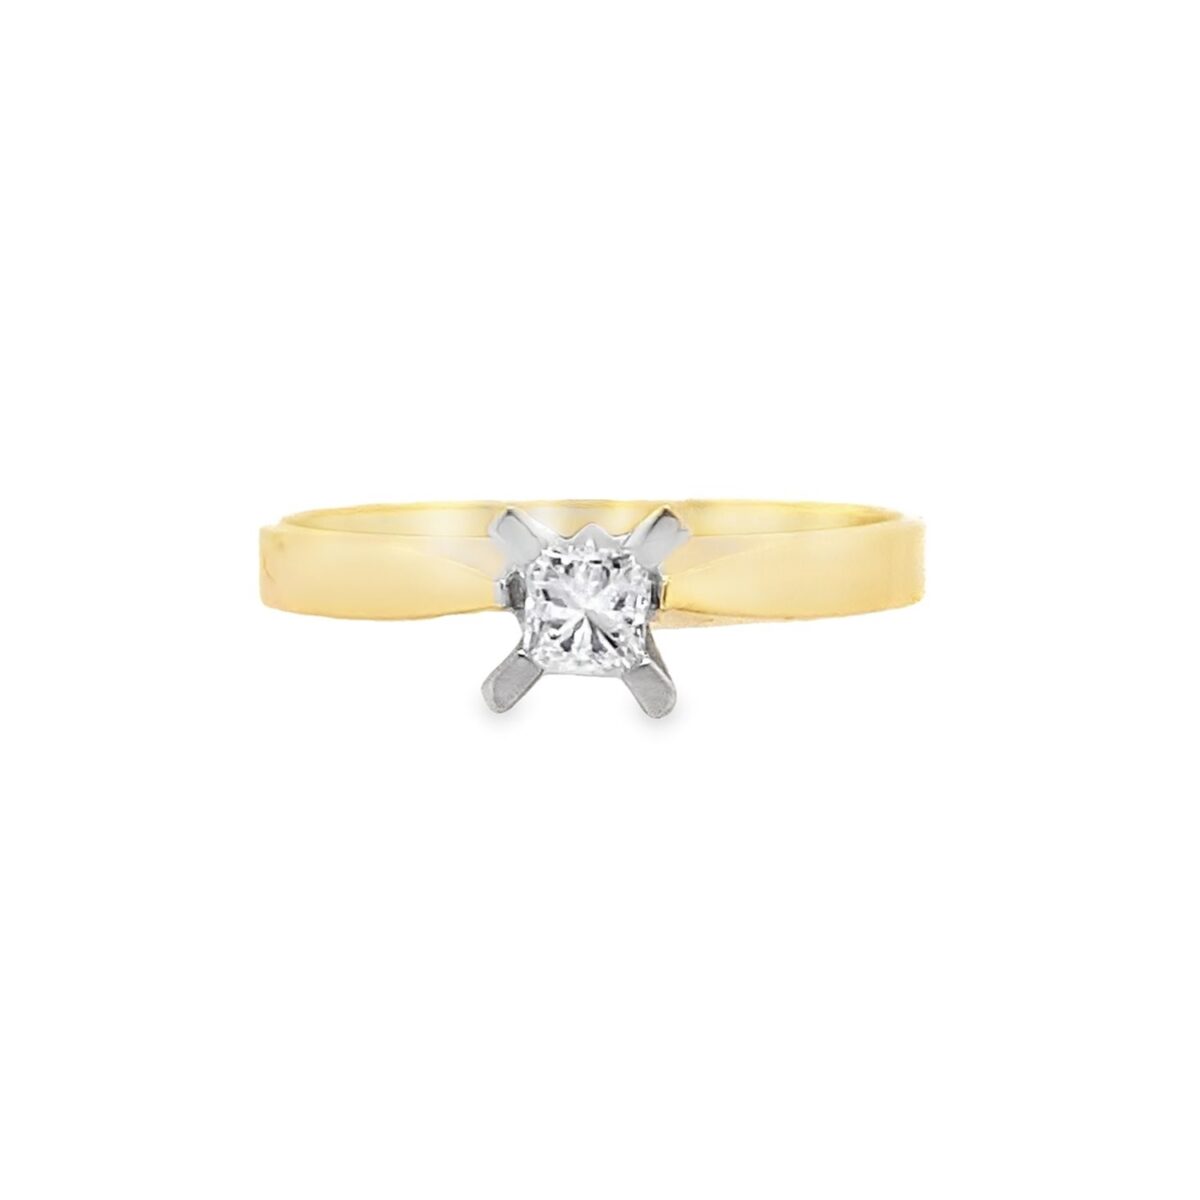 Jewellers - Μονόπετρο δακτυλίδι με διαμάντι Princess